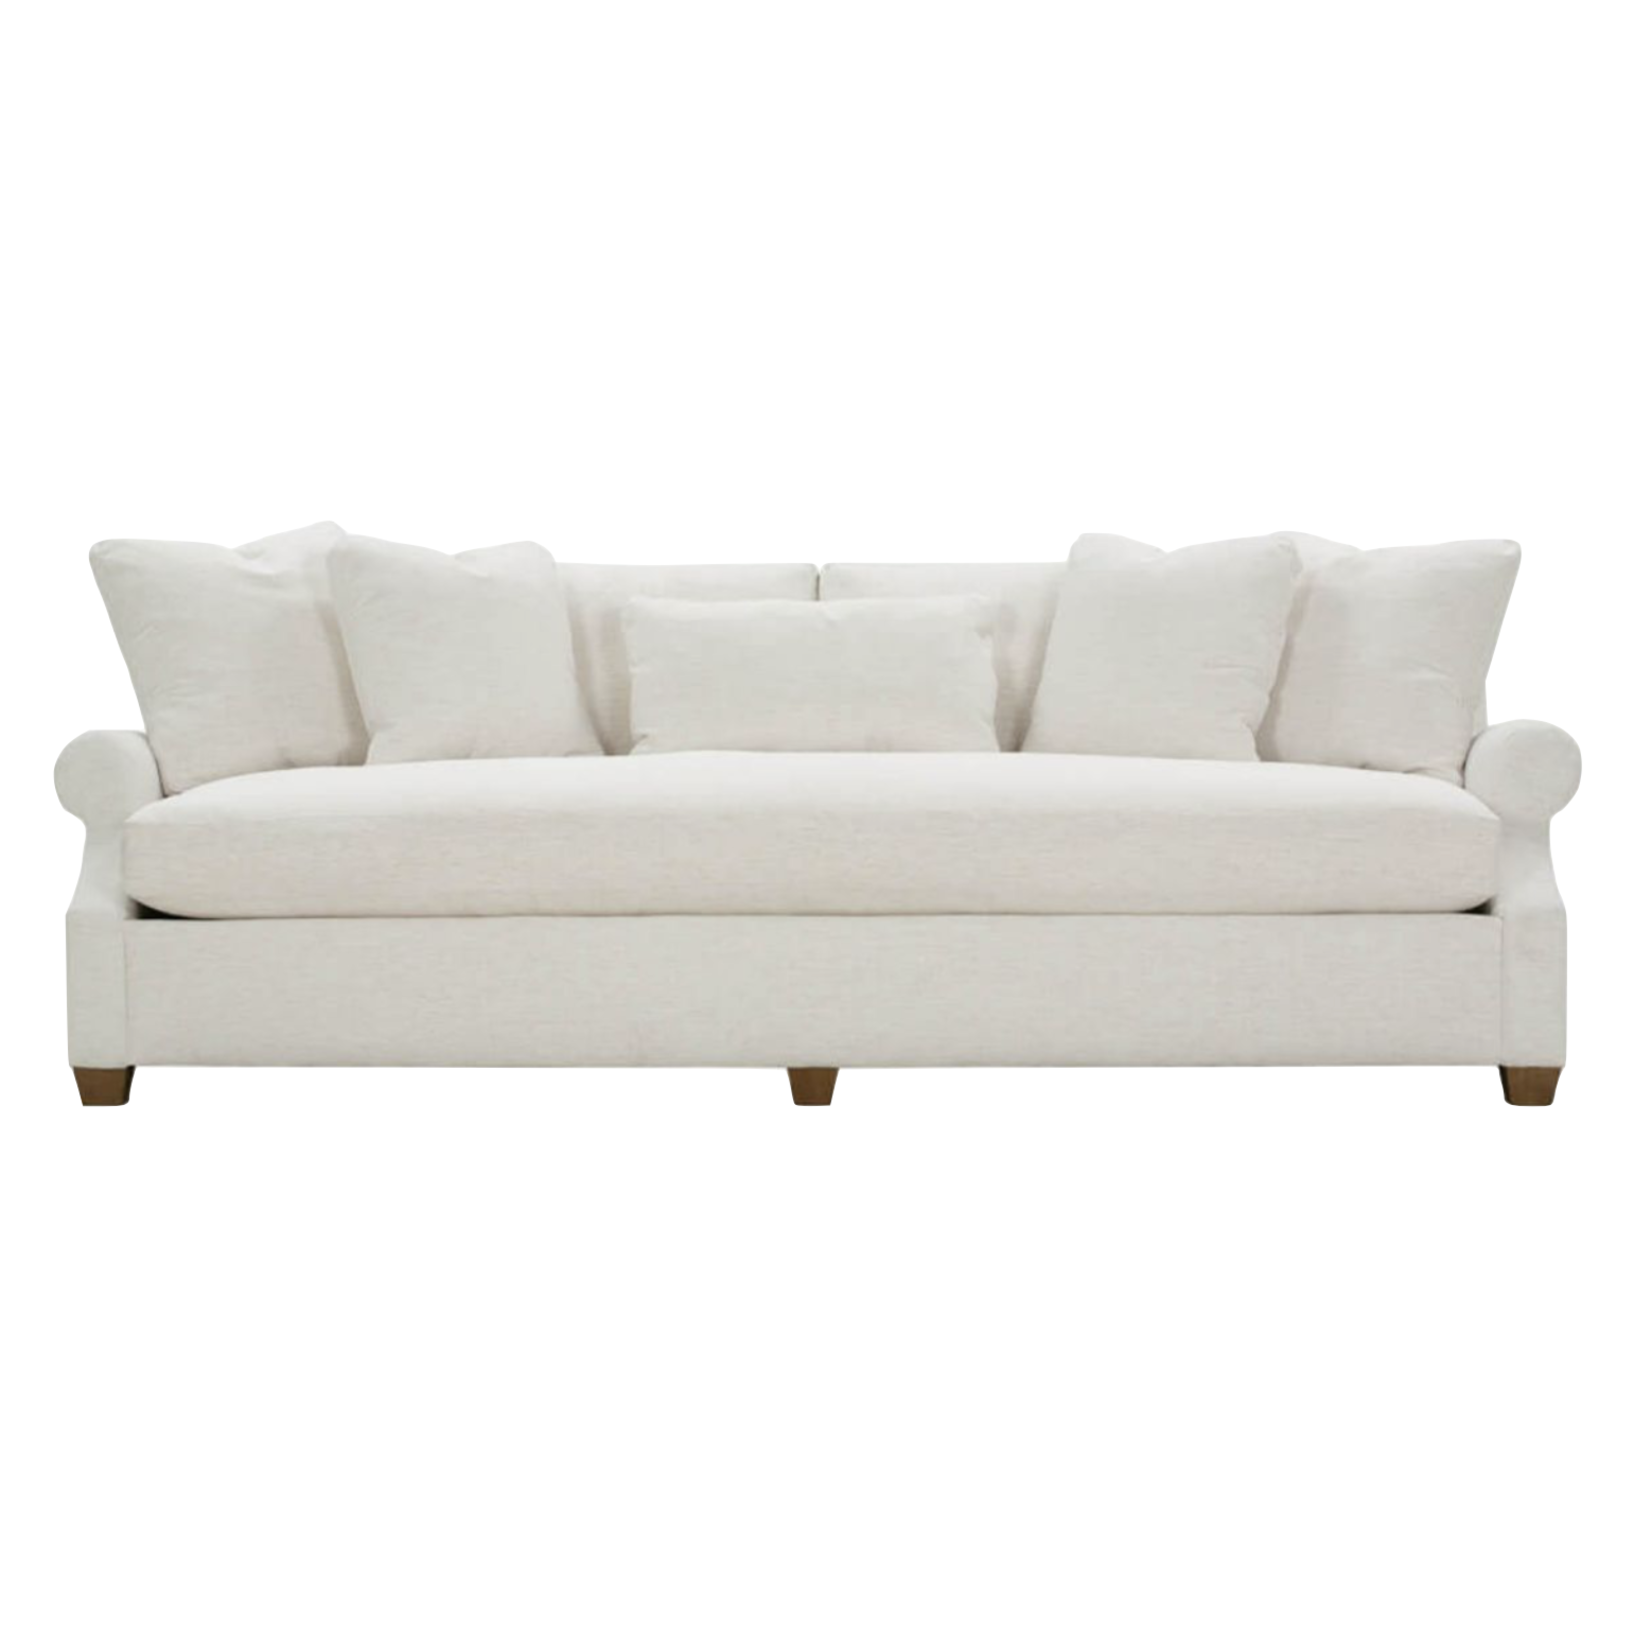 Brady Upholstered Sofa 98"